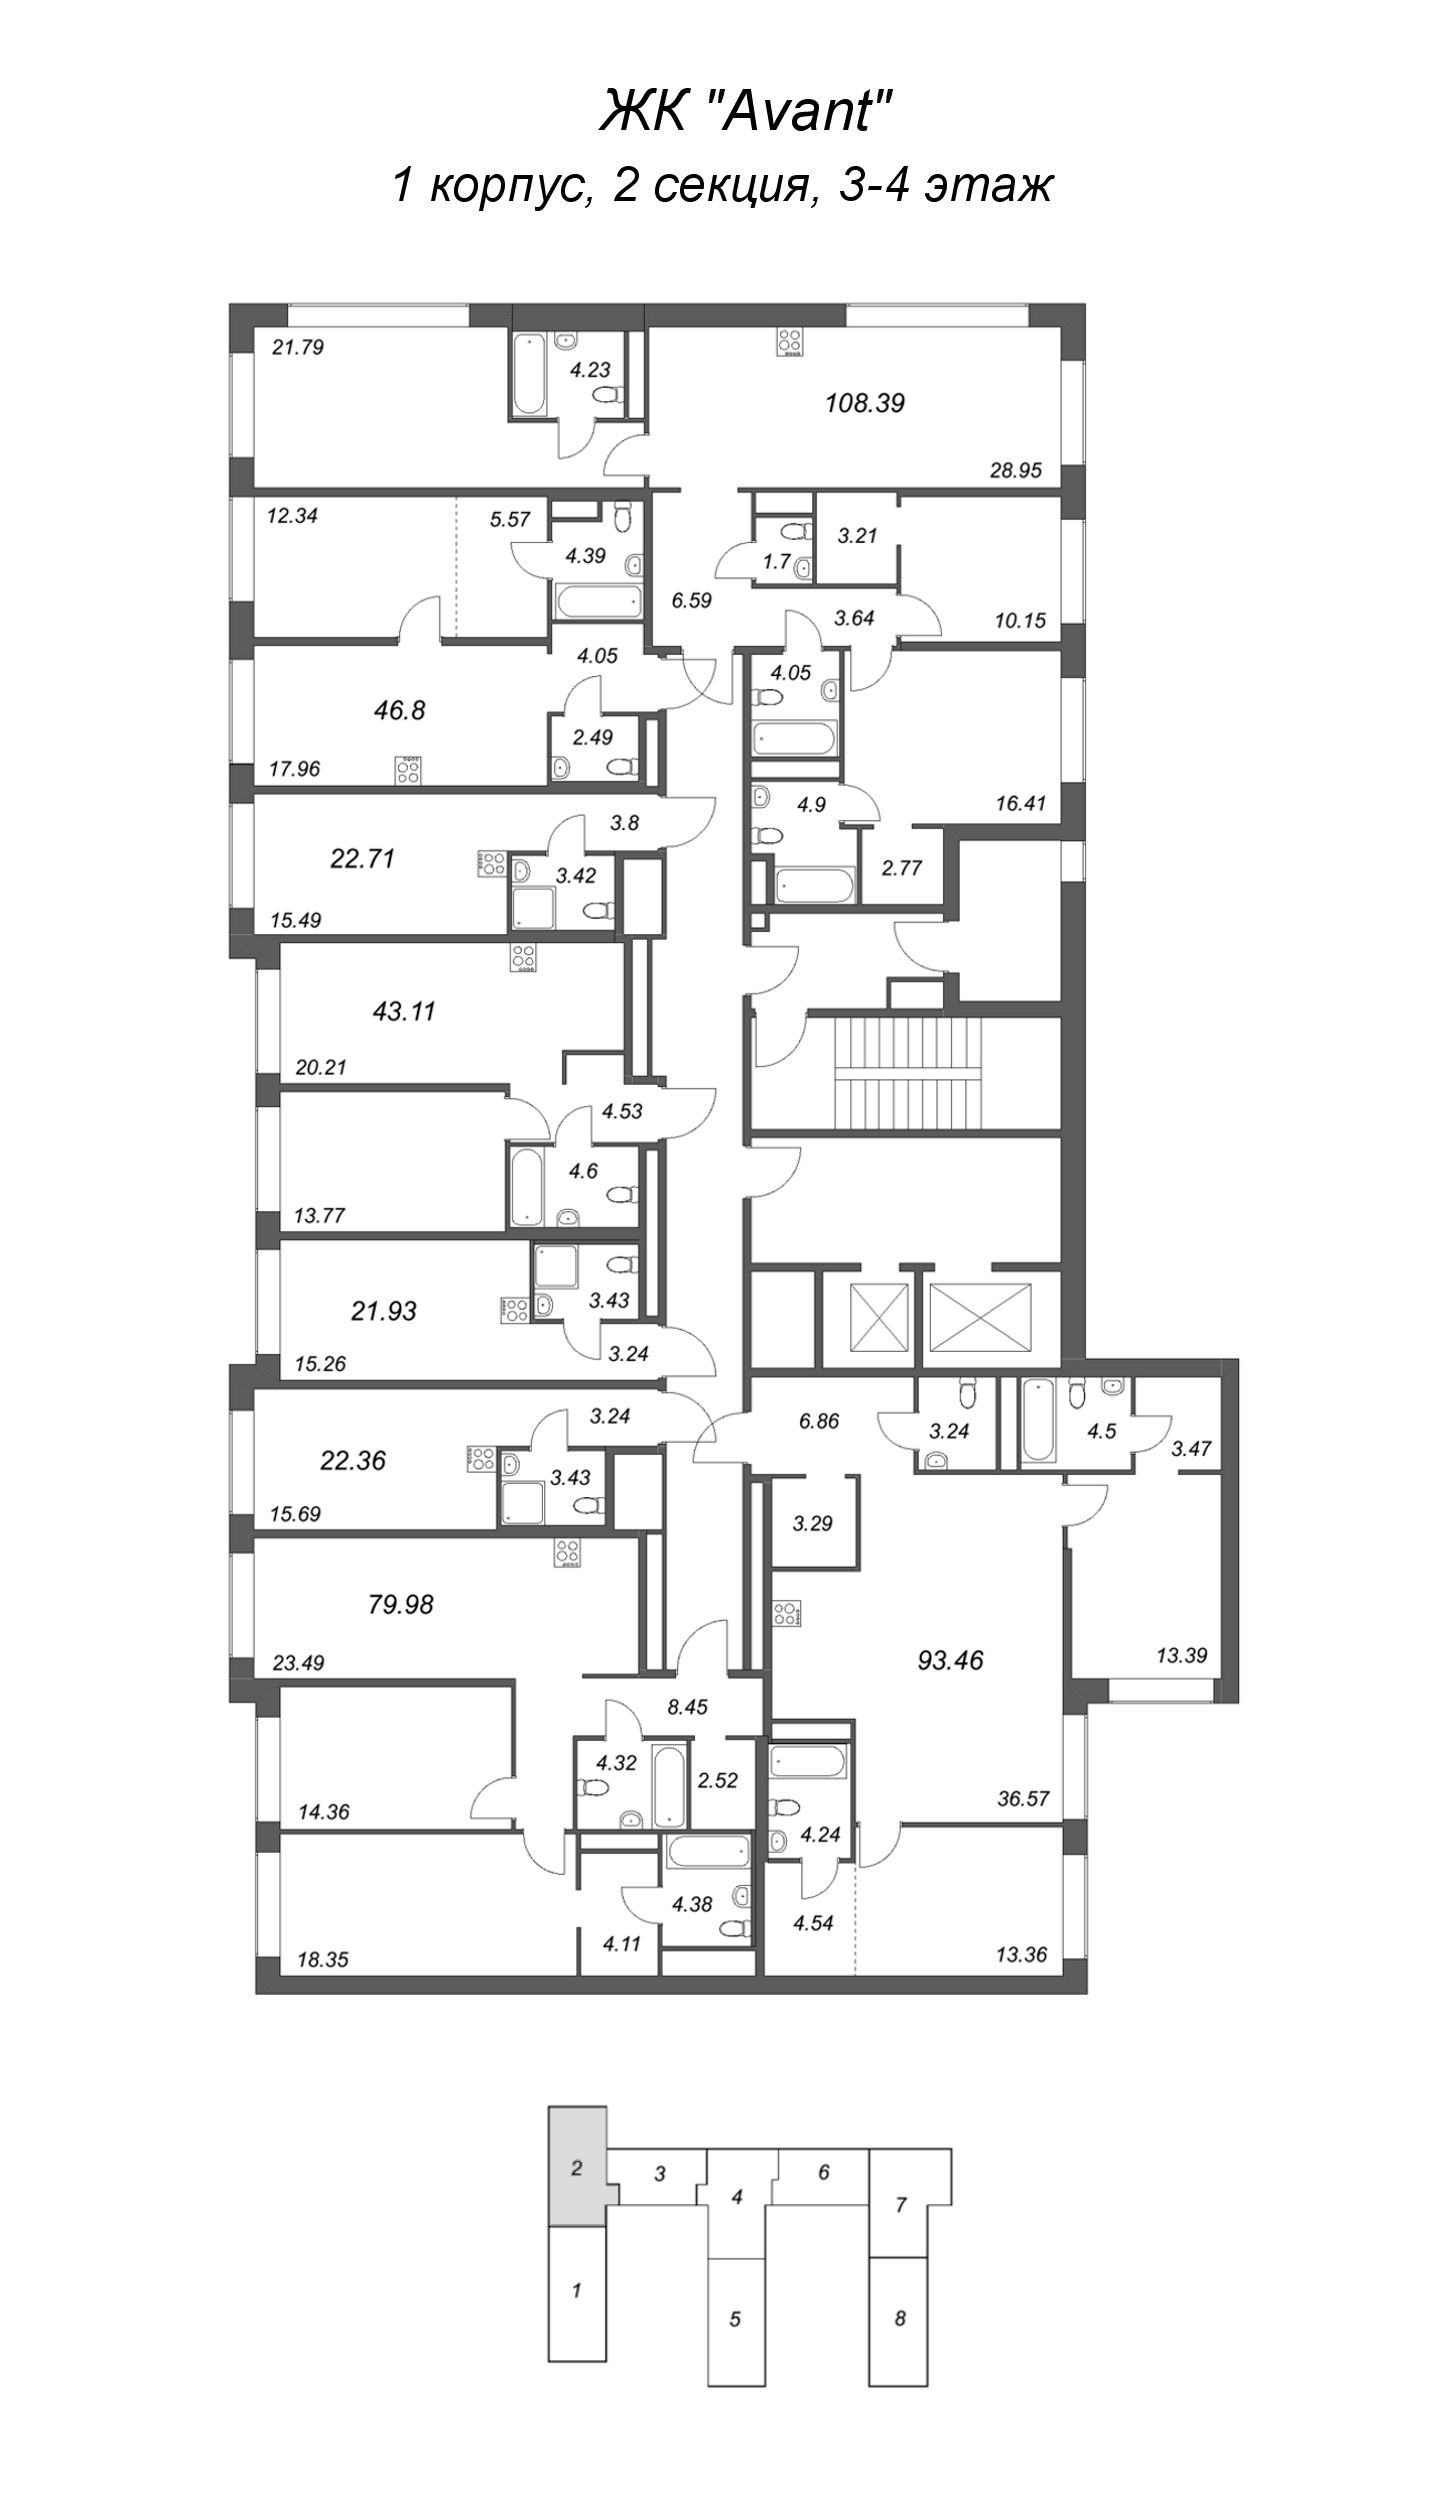 2-комнатная (Евро) квартира, 43.11 м² в ЖК "Avant" - планировка этажа